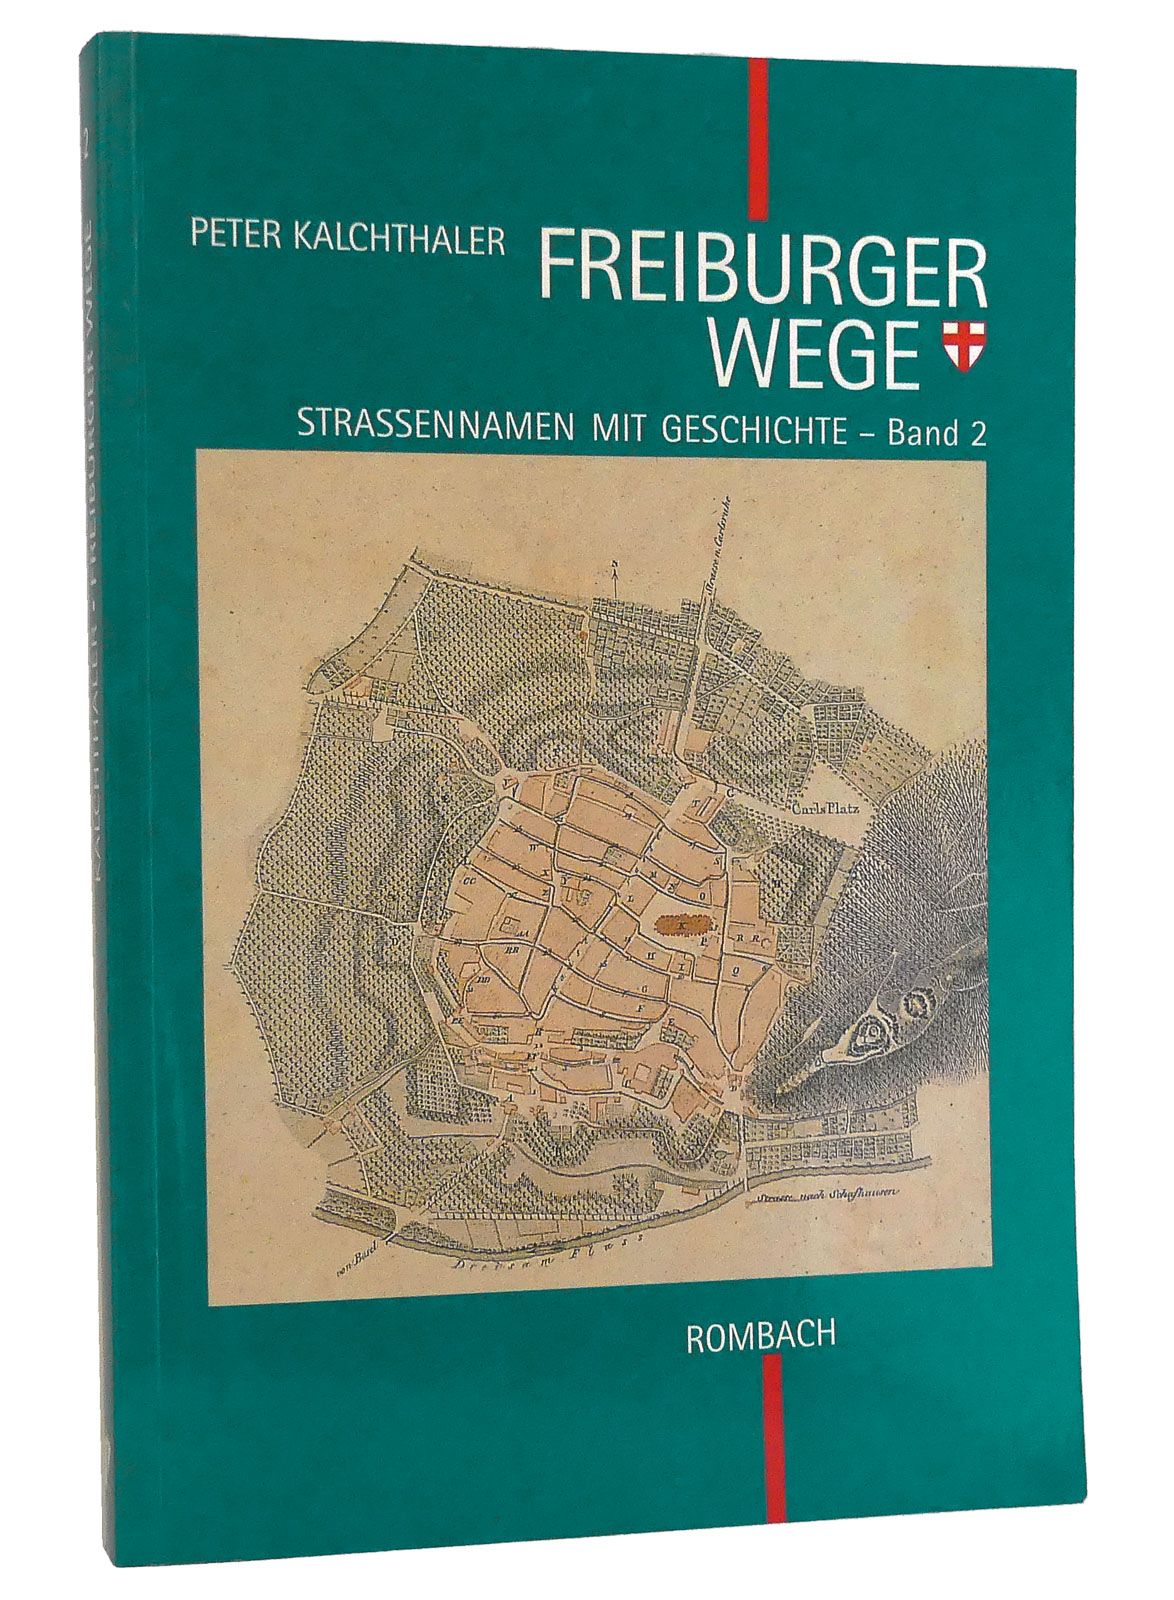 Freiburger Wege, Band 2 : Straßennamen mit Geschichte - Kalchthaler, Peter